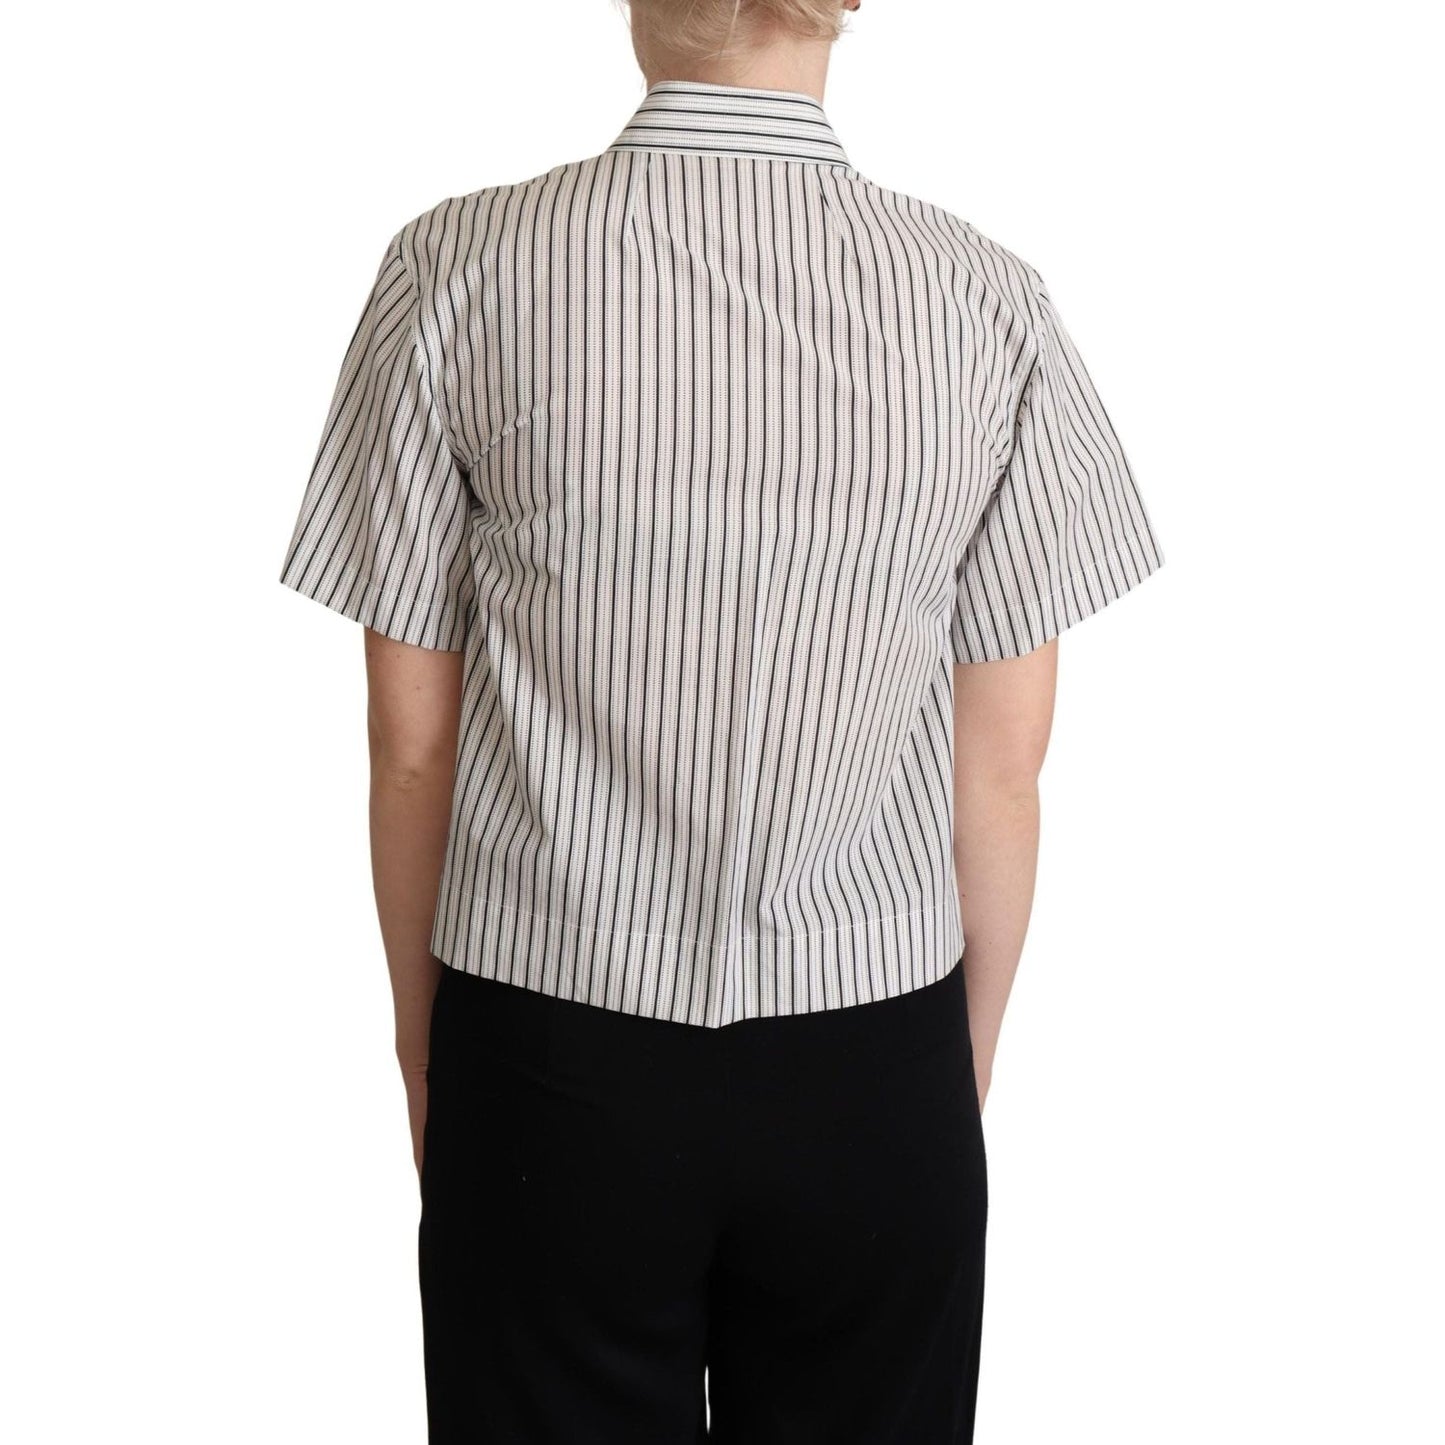 Dolce & Gabbana Chic Monochrome Striped Polo Shirt Blouse Top white-black-striped-collared-shirt